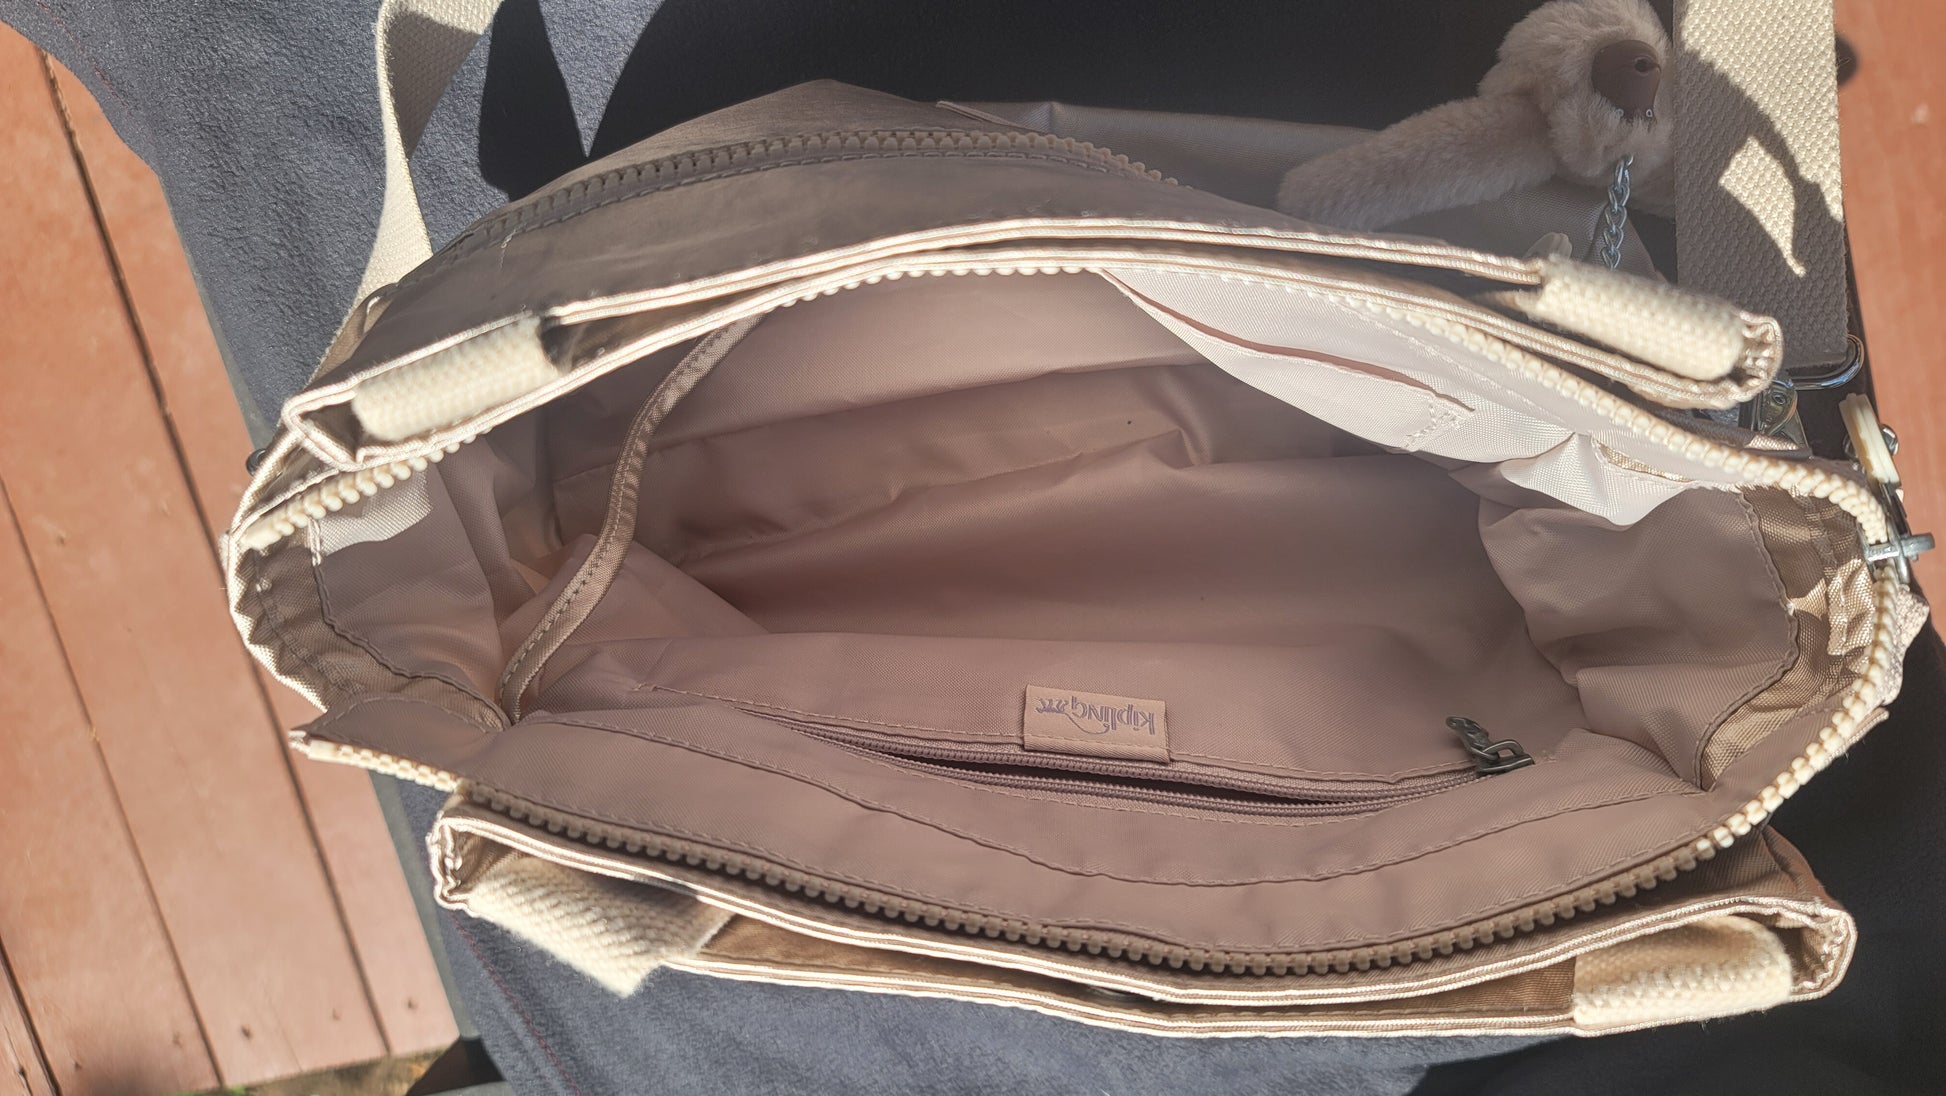 SALE! 😻 Kipling bag RETRO pin-up theme | Kipling bags, Retro pin up, Bags